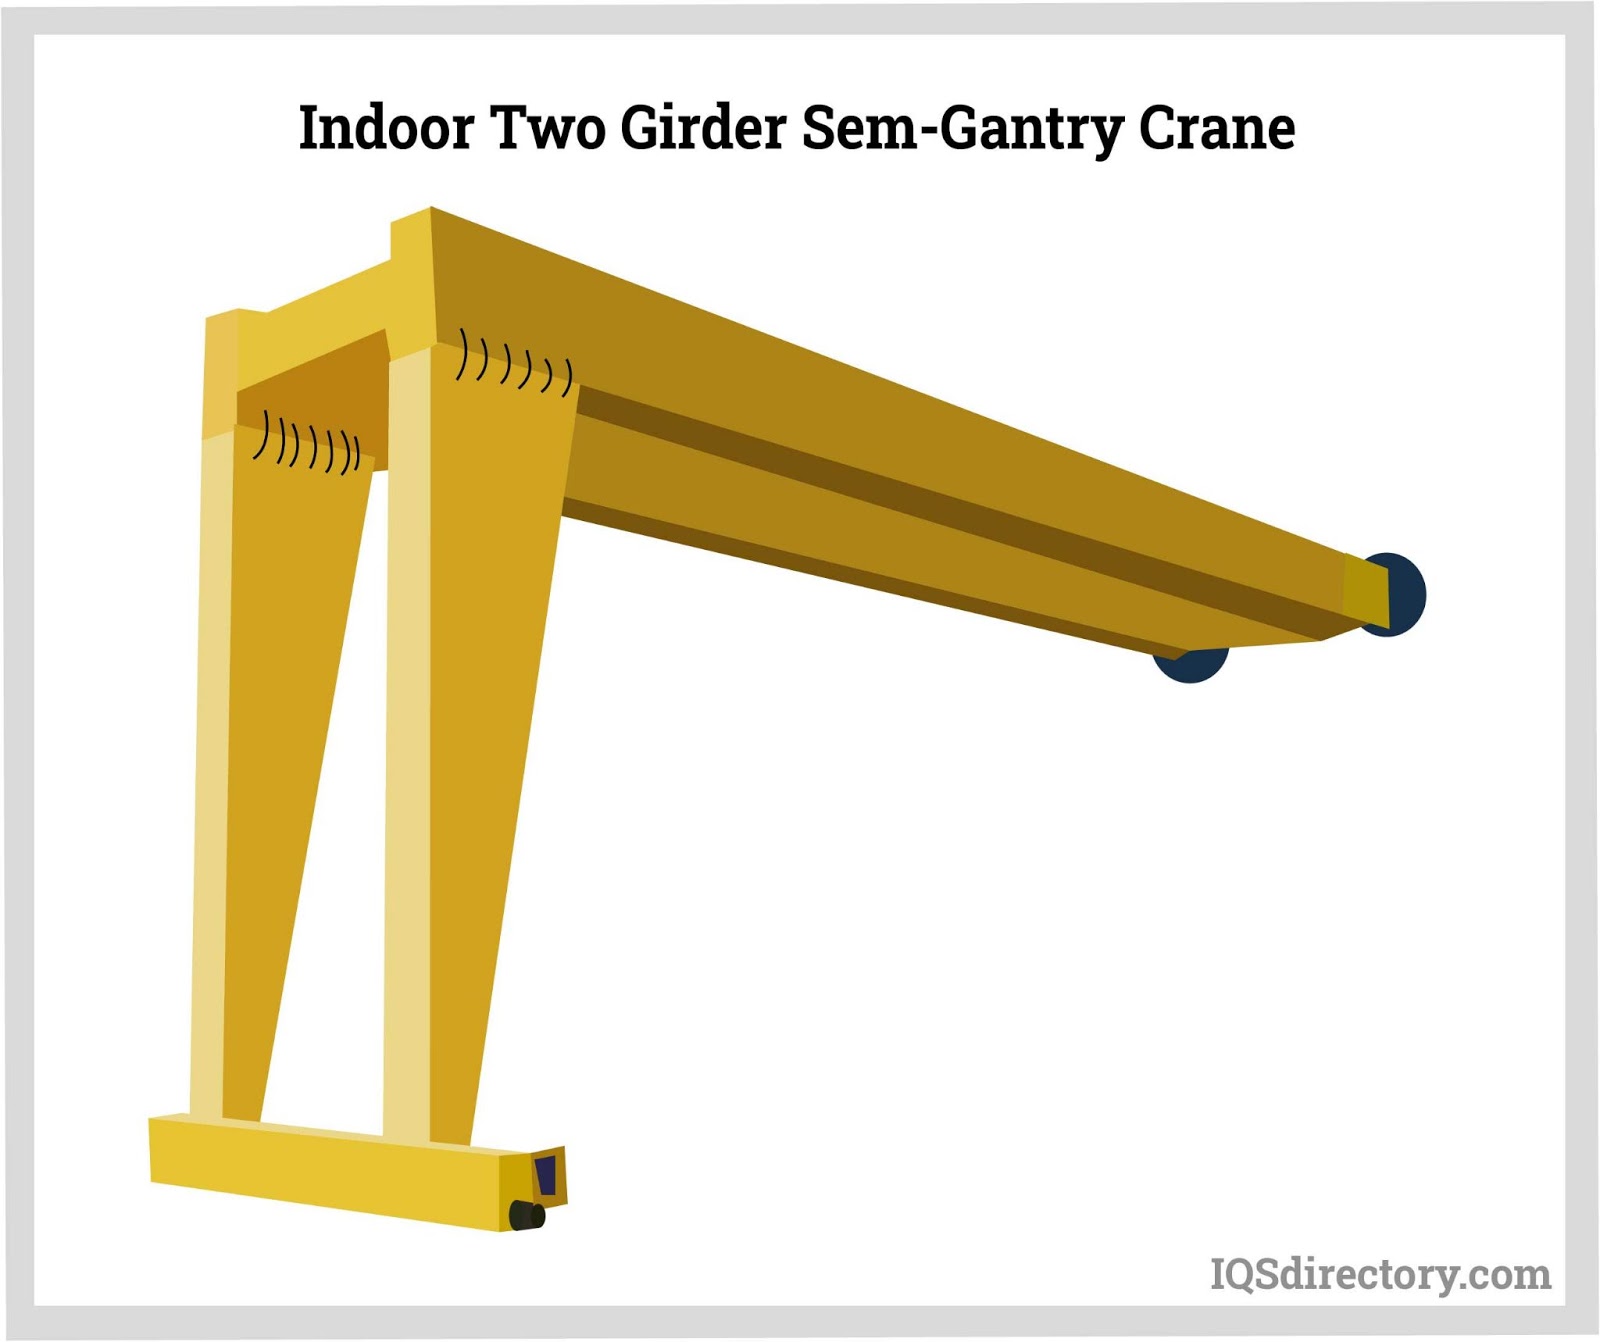 Indoor Two Girder Semi-Gantry Crane